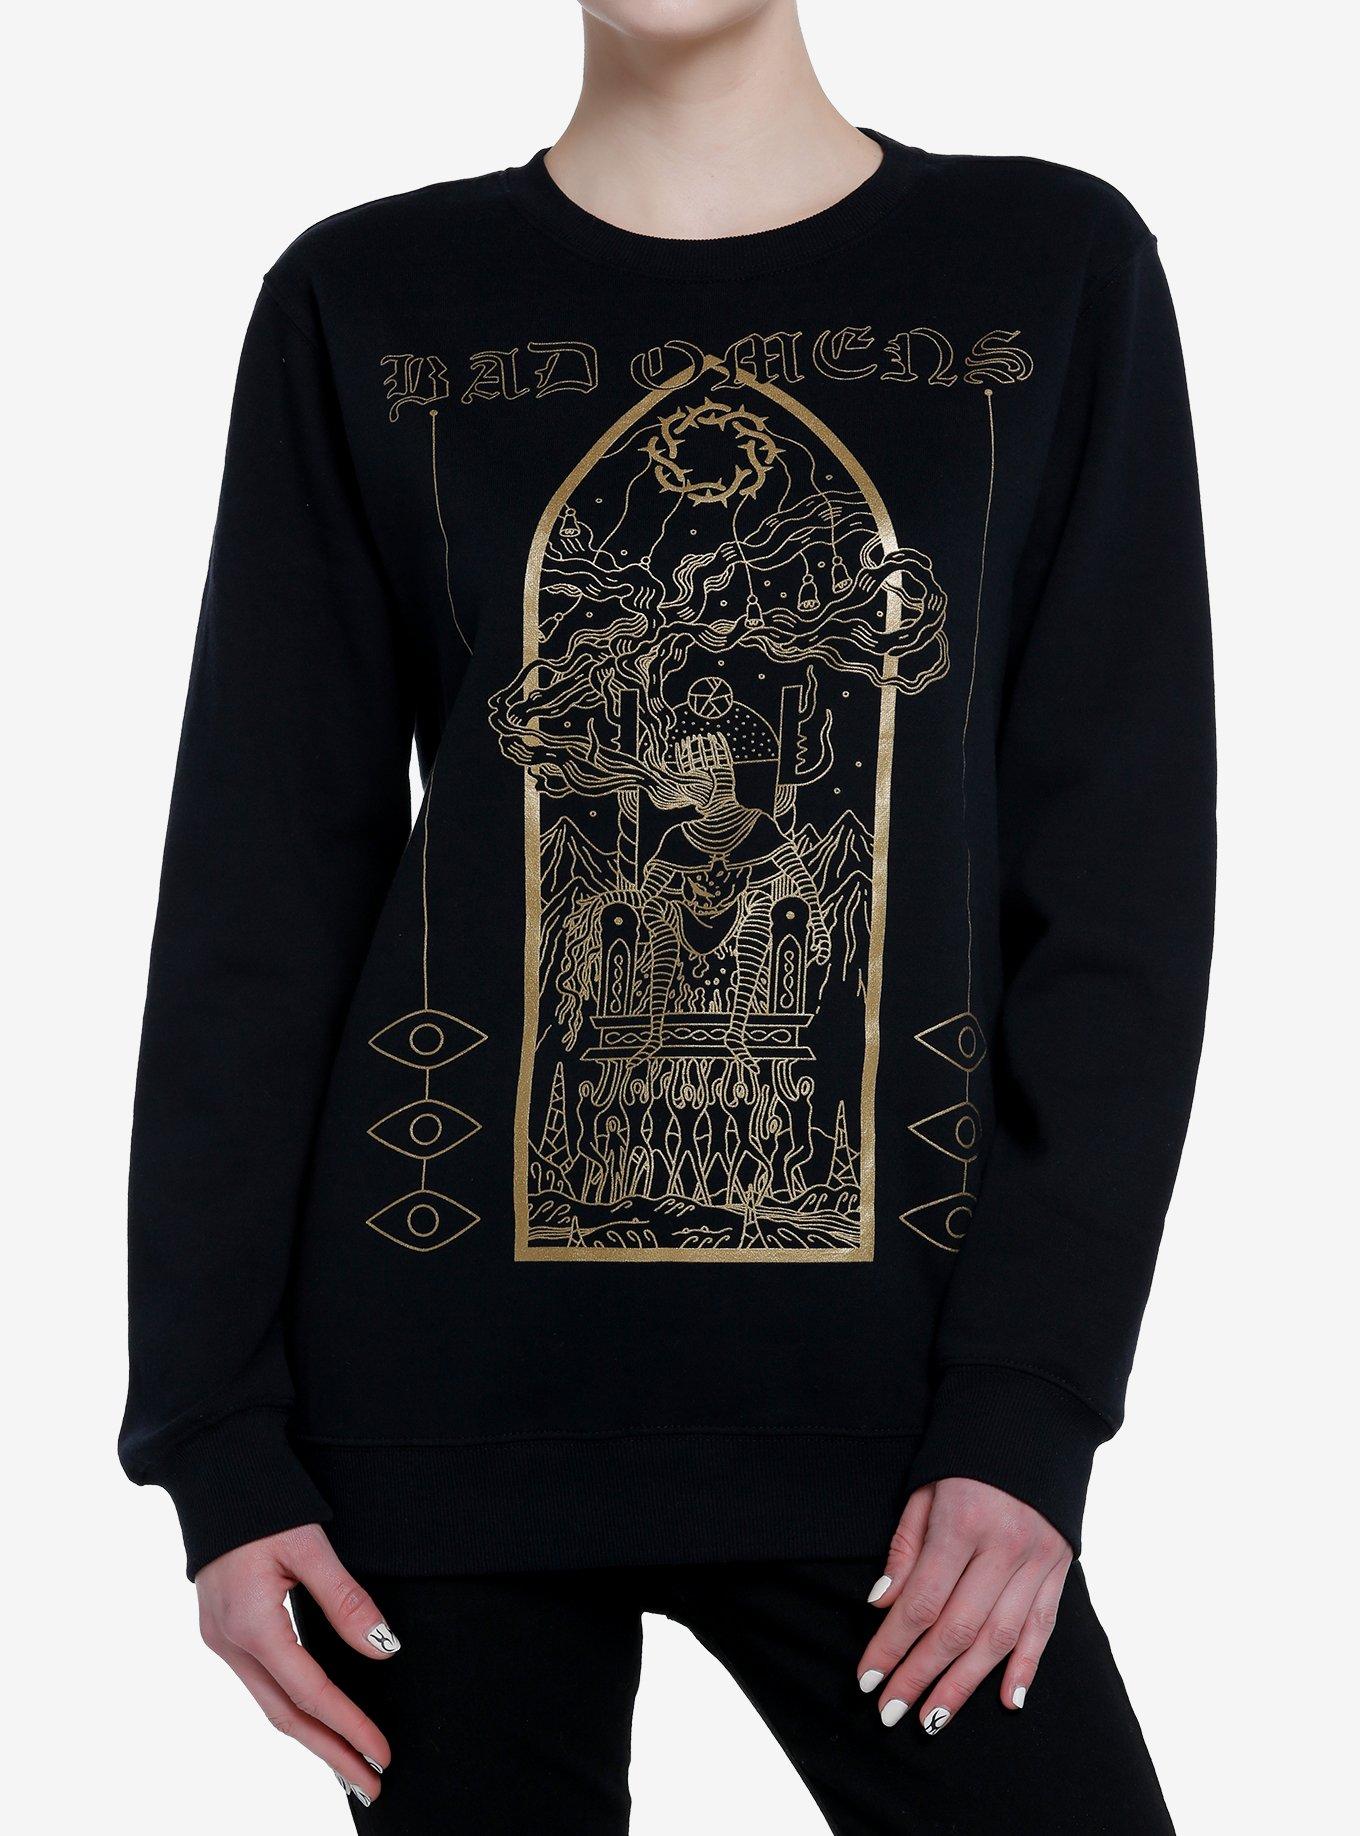 Bad Omens Merch Slayer Shirt, hoodie, longsleeve, sweater